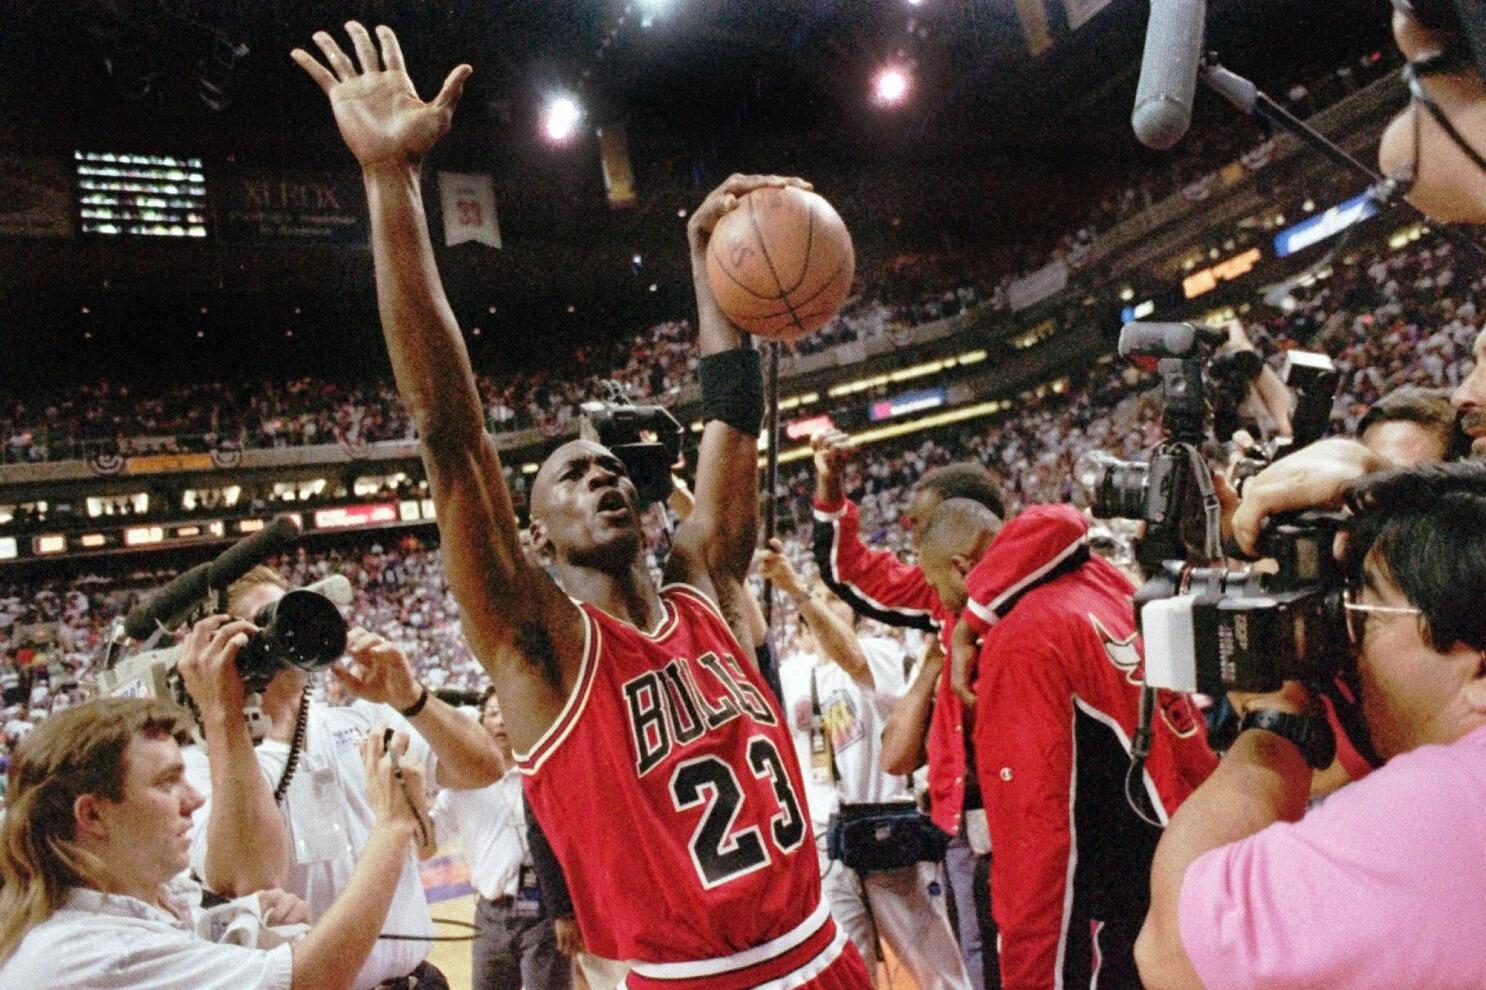 1996 NBA Finals official game program Chicago Bulls